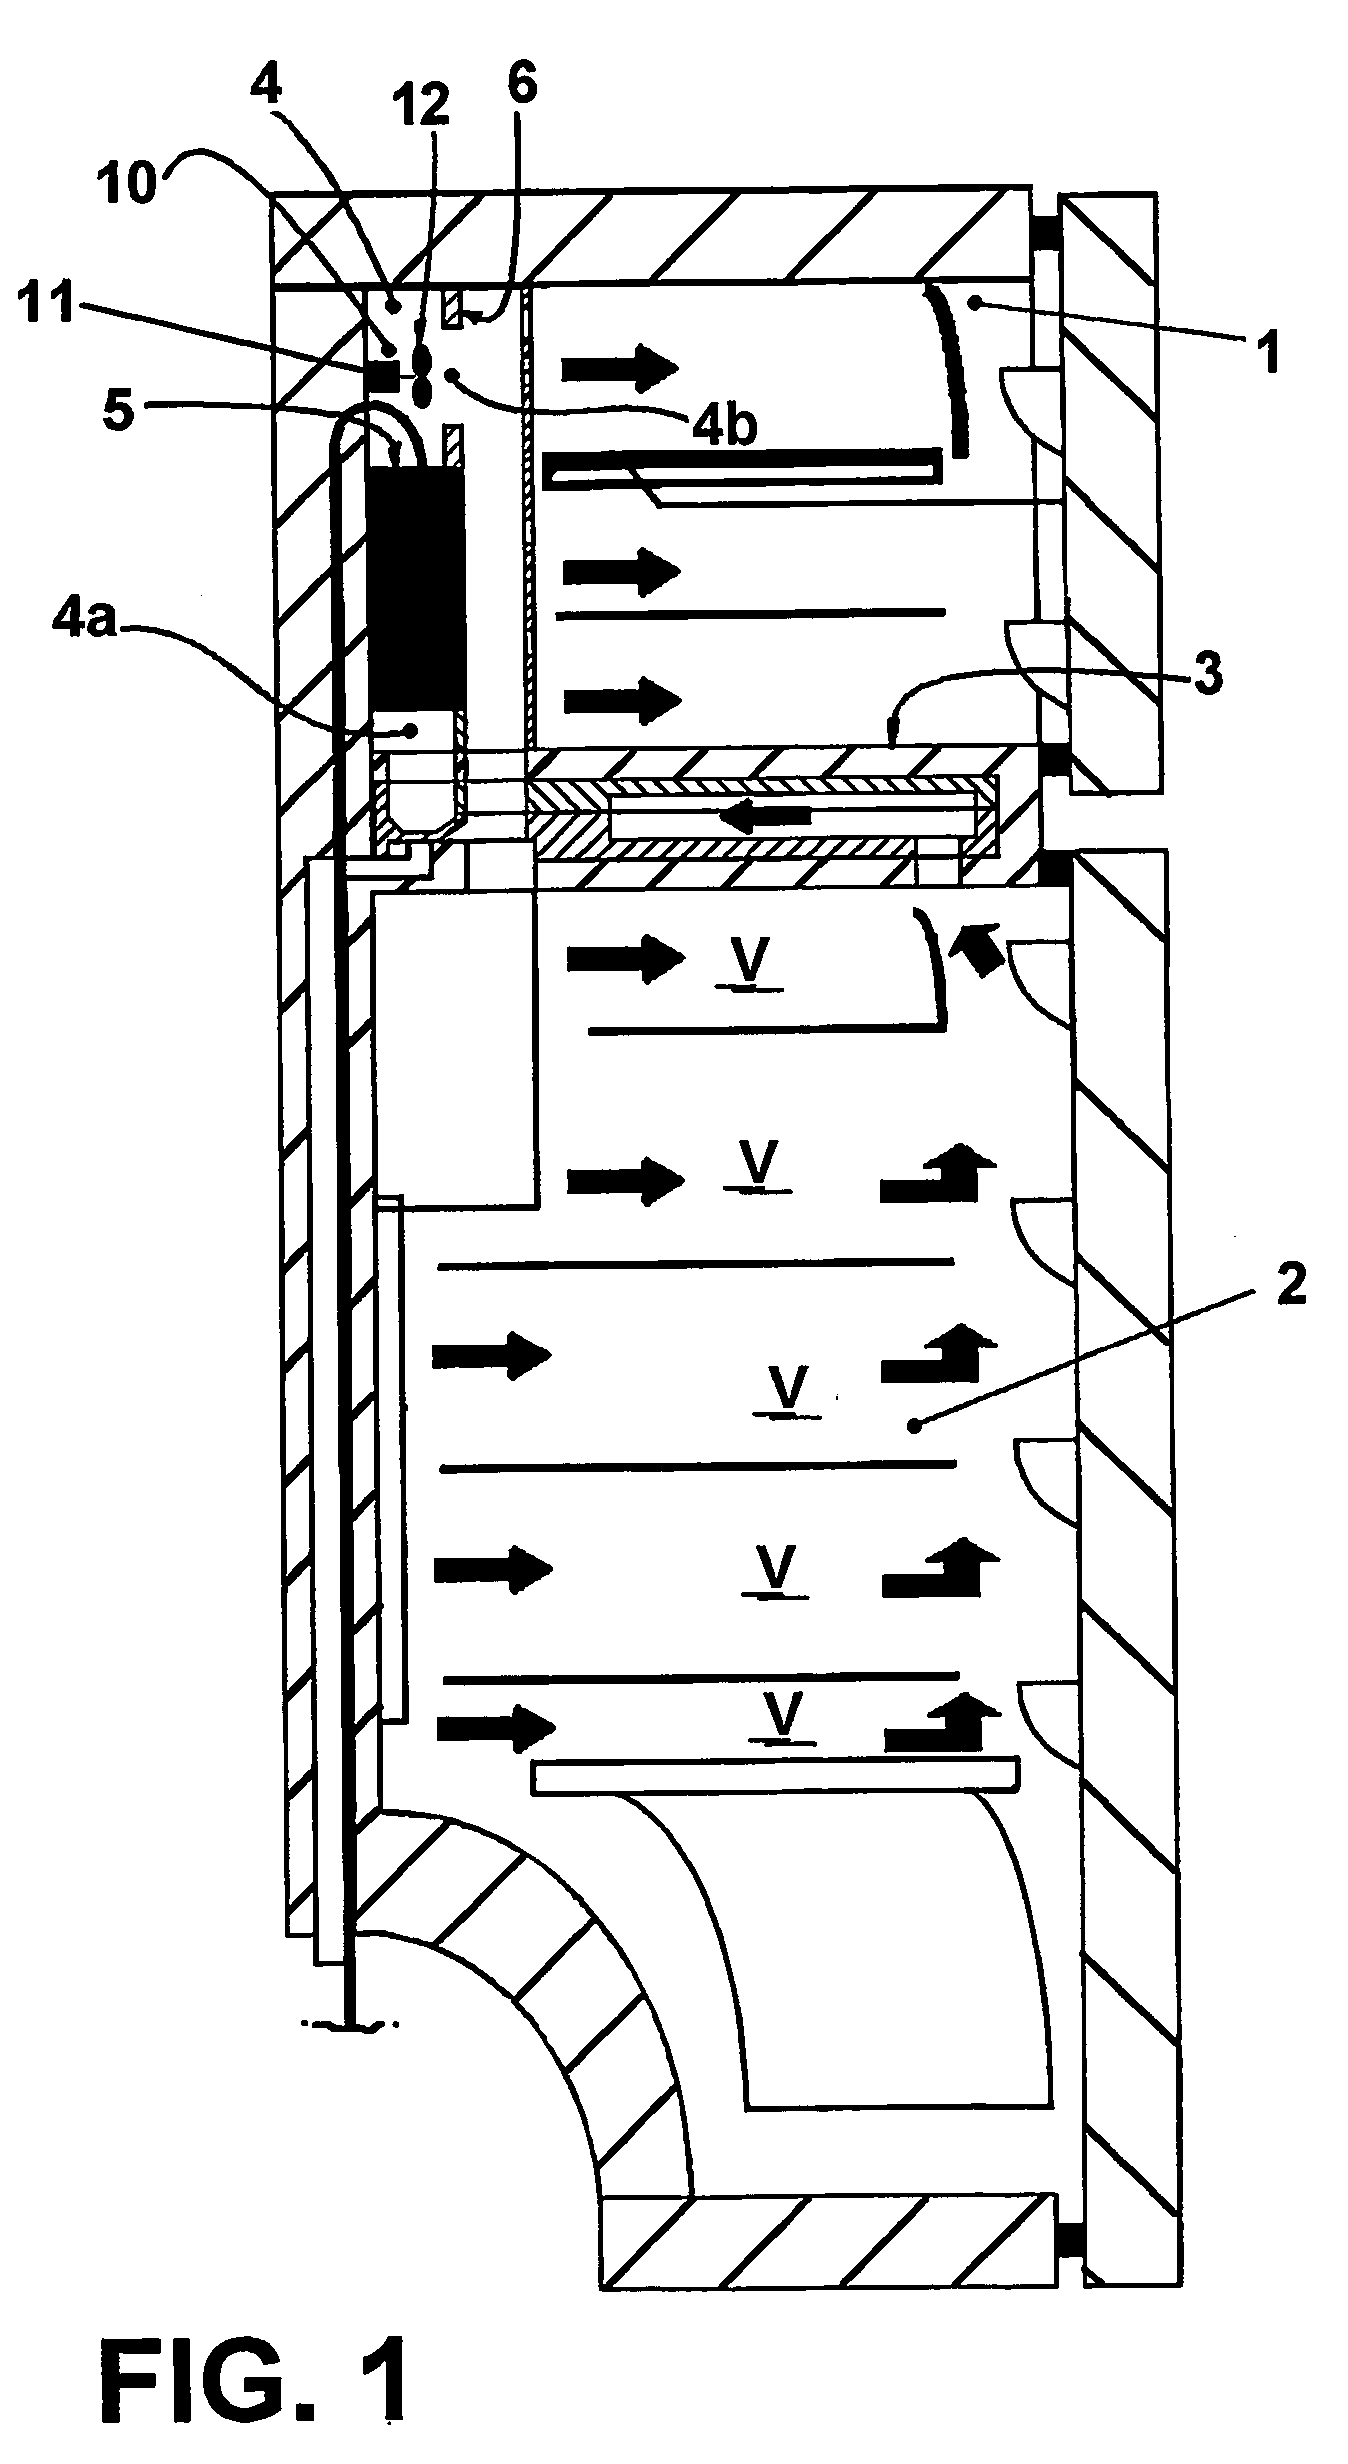 Mounting arrangement for a refrigerator fan